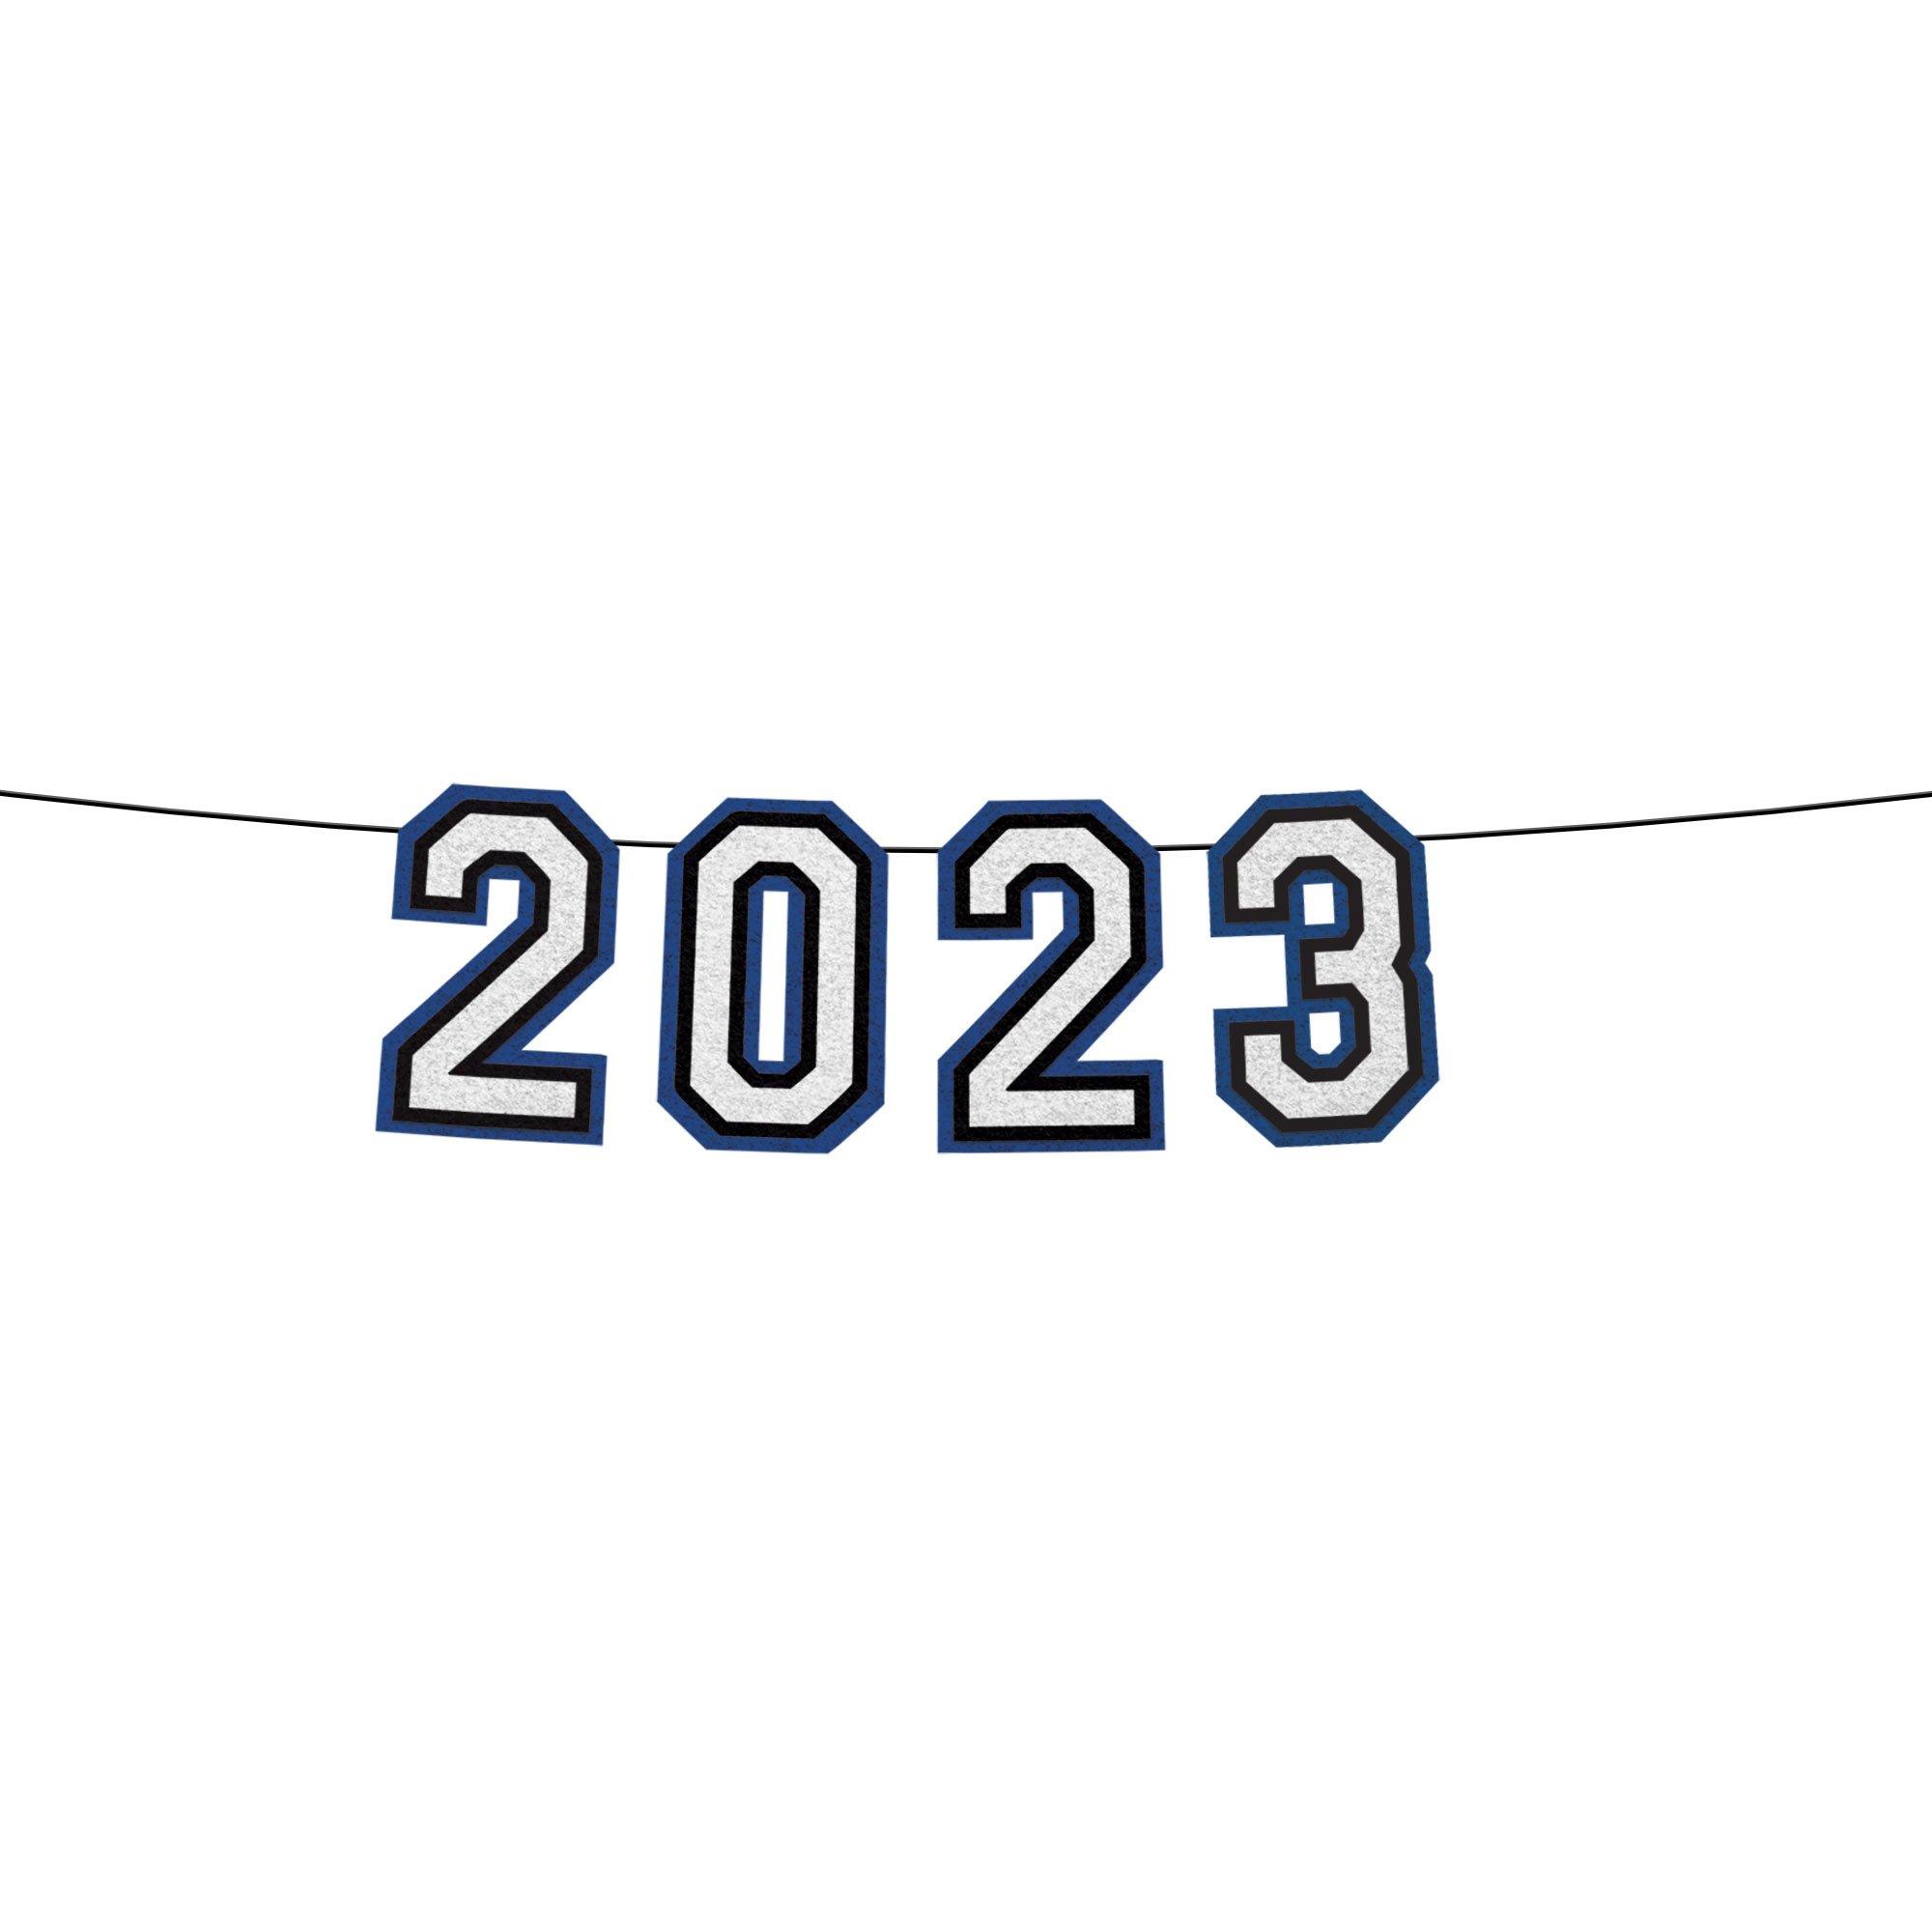 2023 Graduation Felt Banner, 12ft